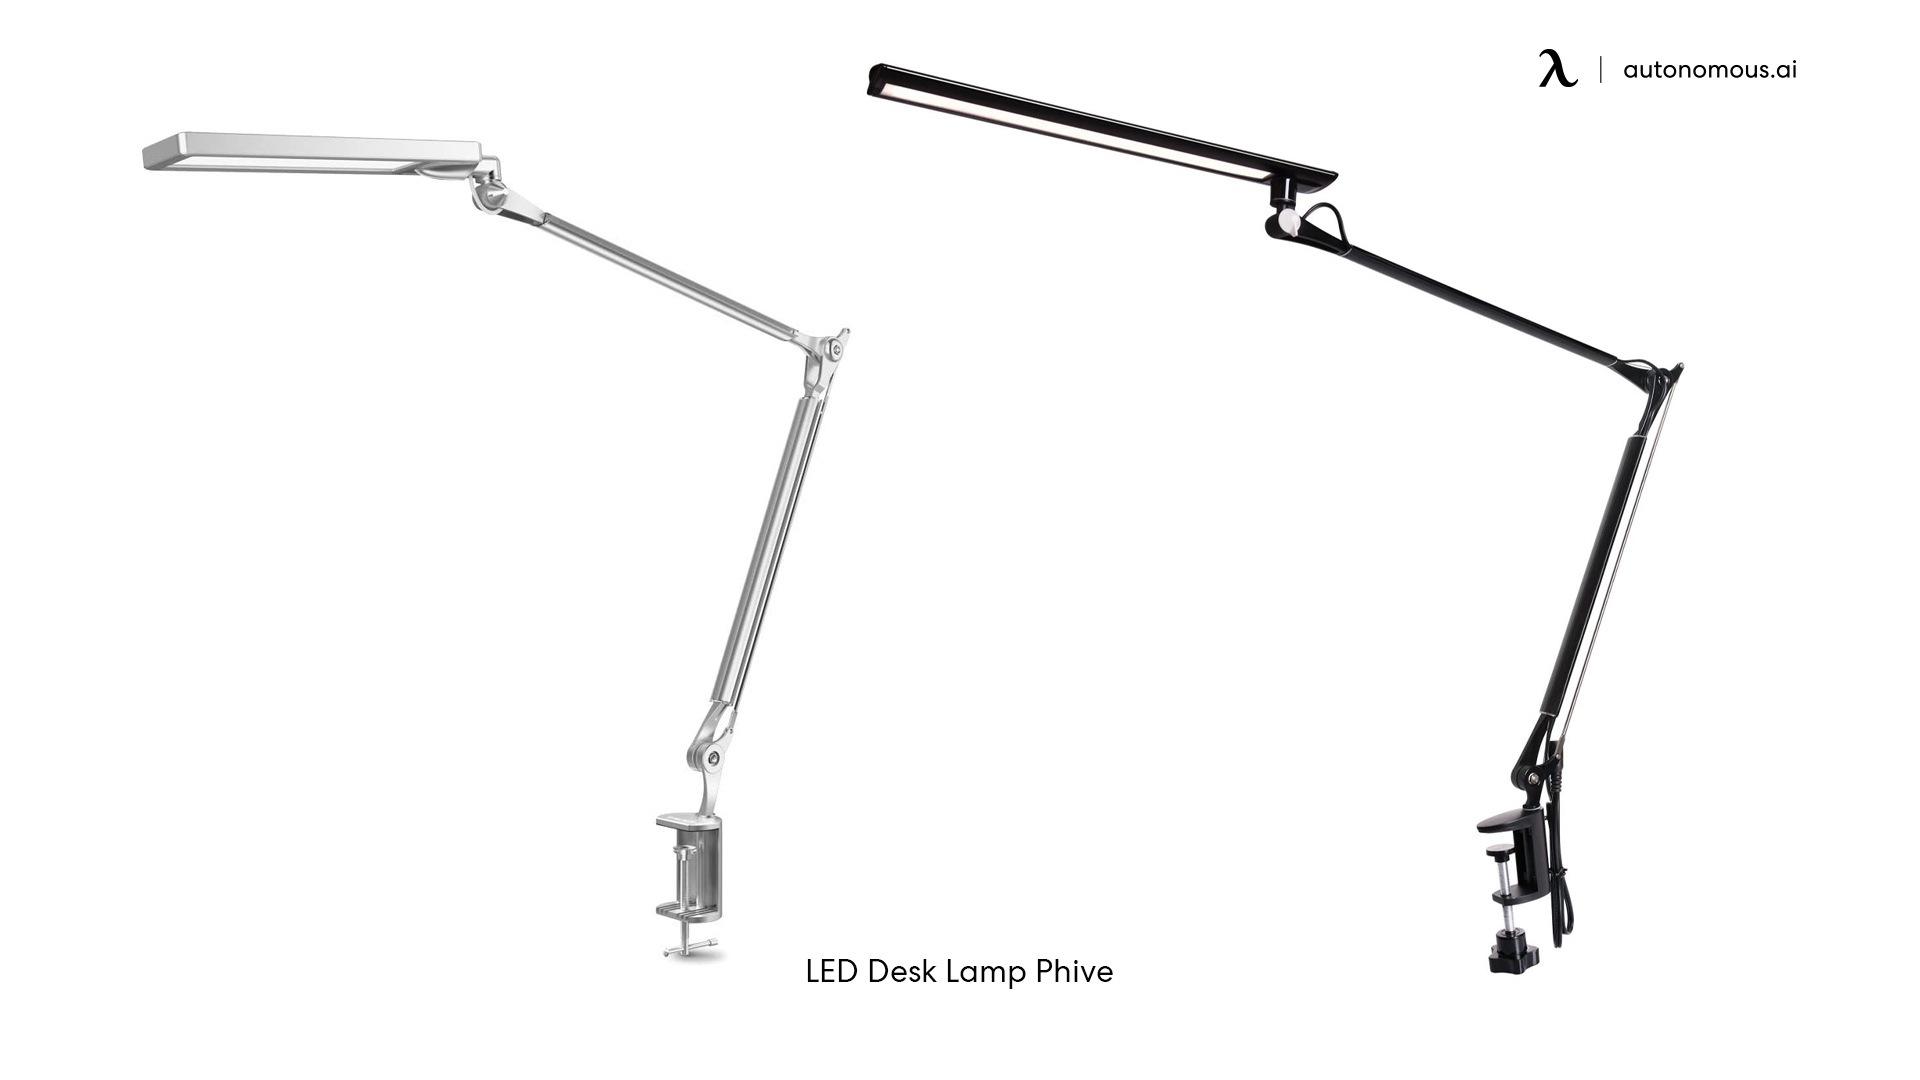 LED Desk Lamp Phive